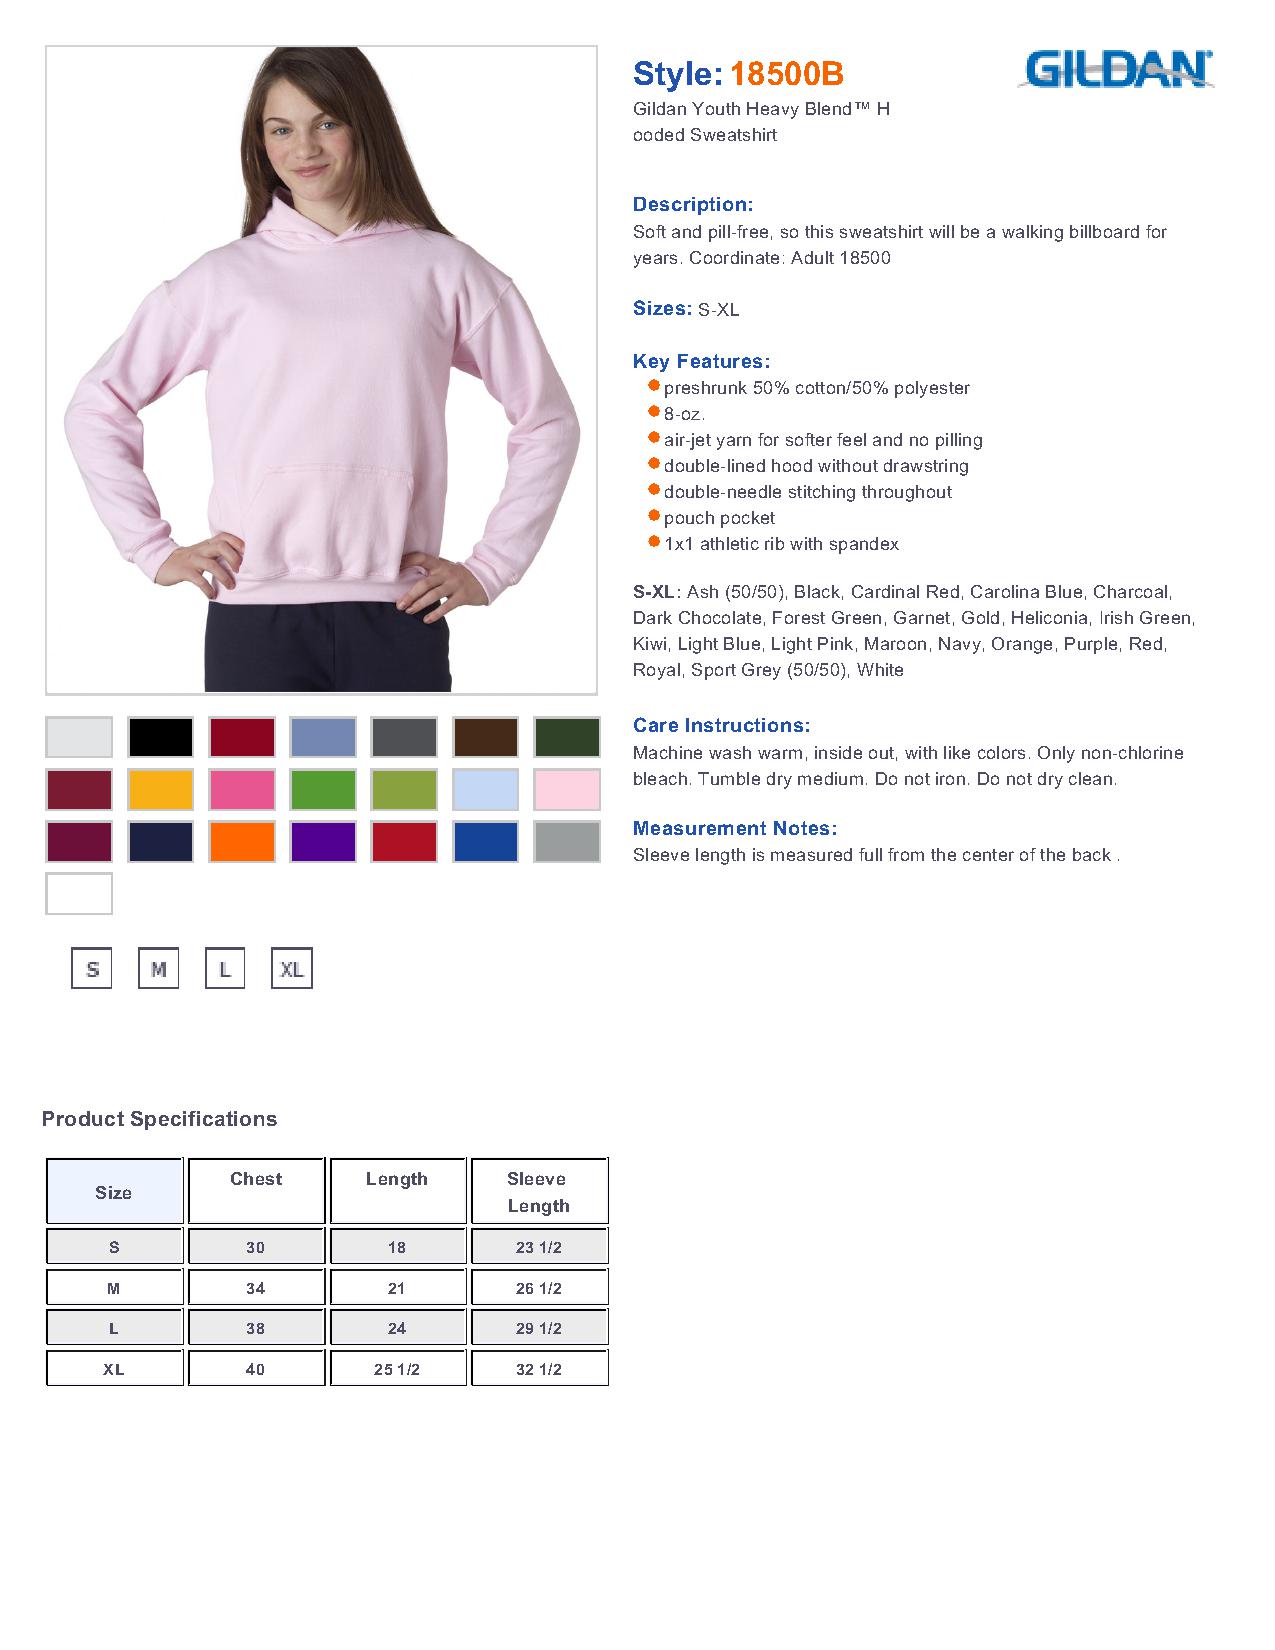 Gildan 18500B Youth Heavy Blend Sweatshirt $14.70 - Youth's Fleece